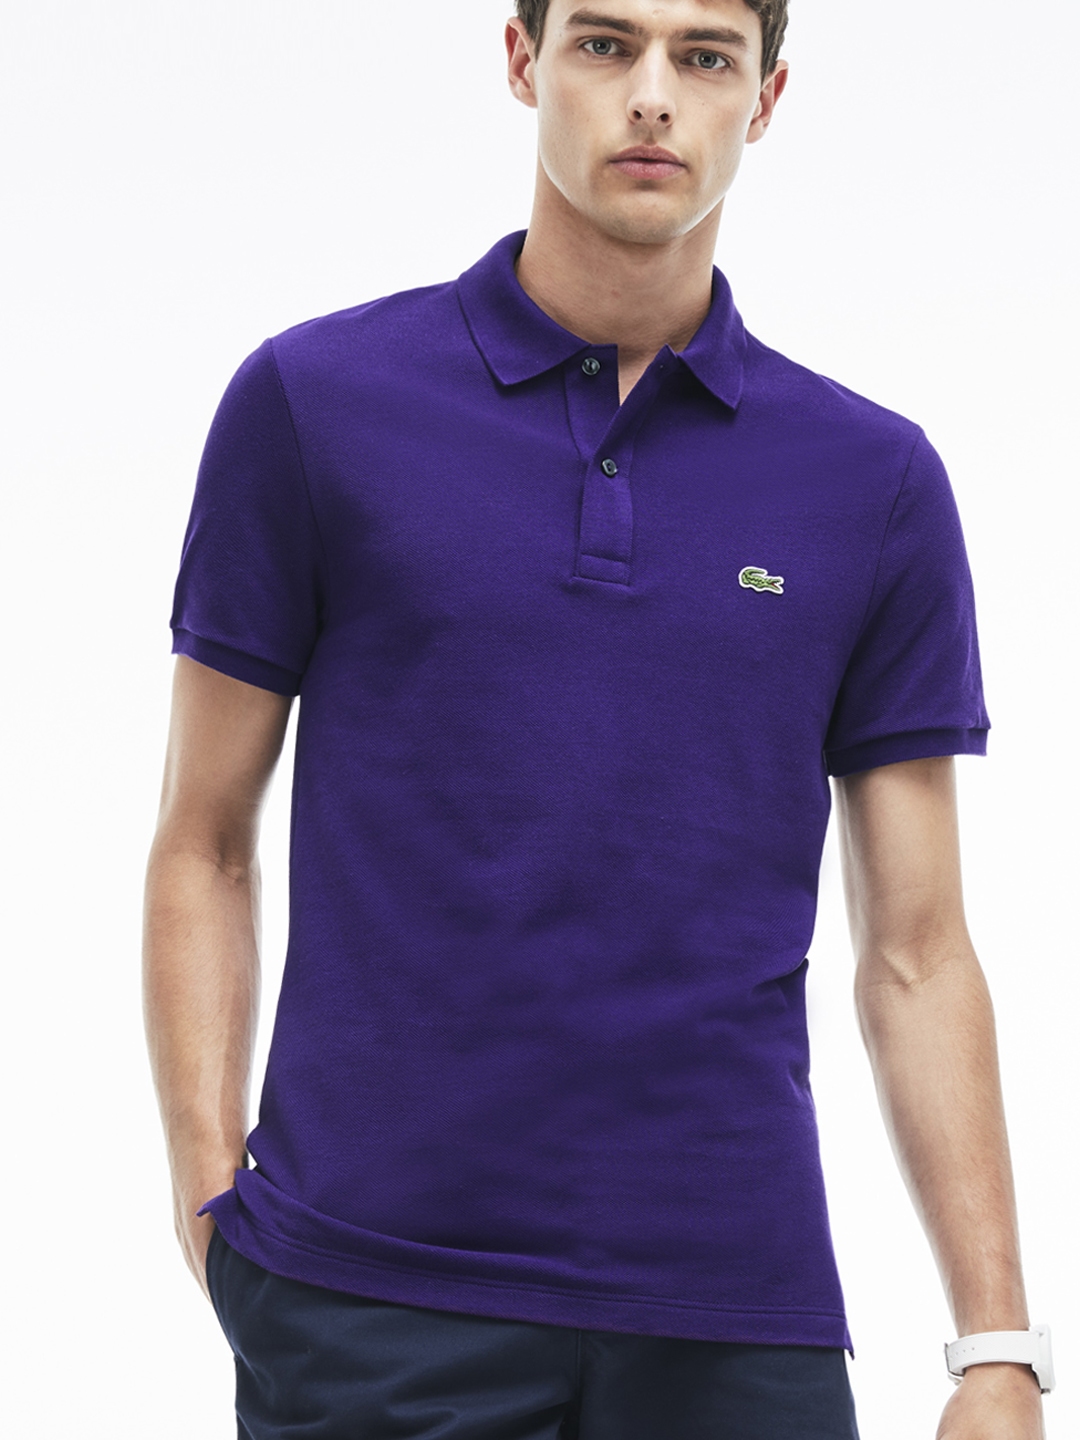 purple lacoste t shirt